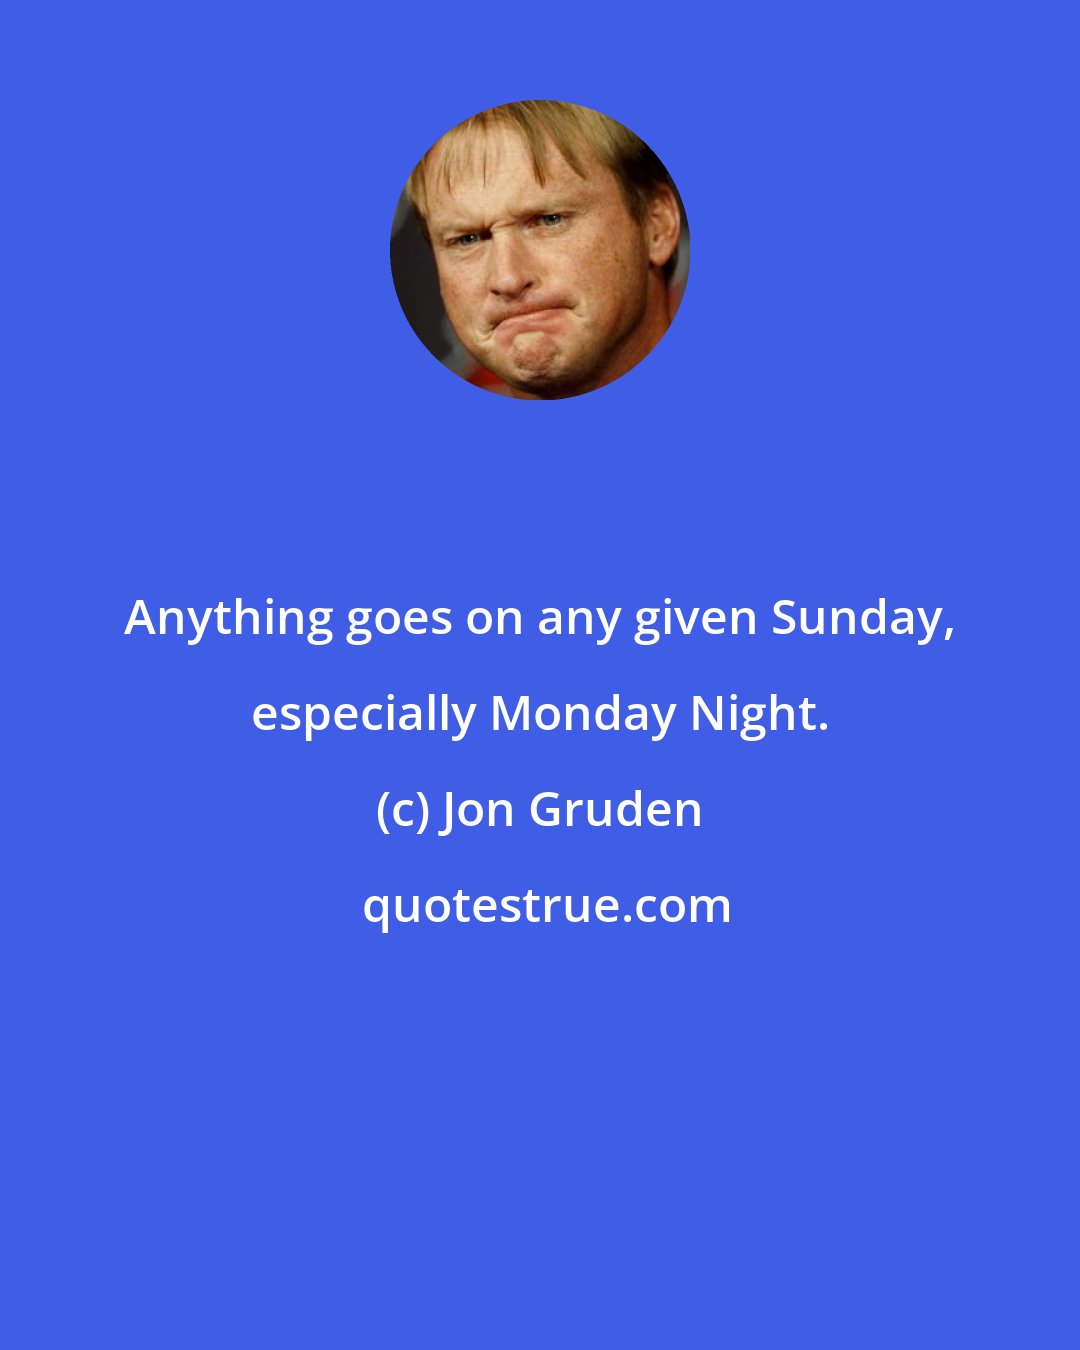 Jon Gruden: Anything goes on any given Sunday, especially Monday Night.